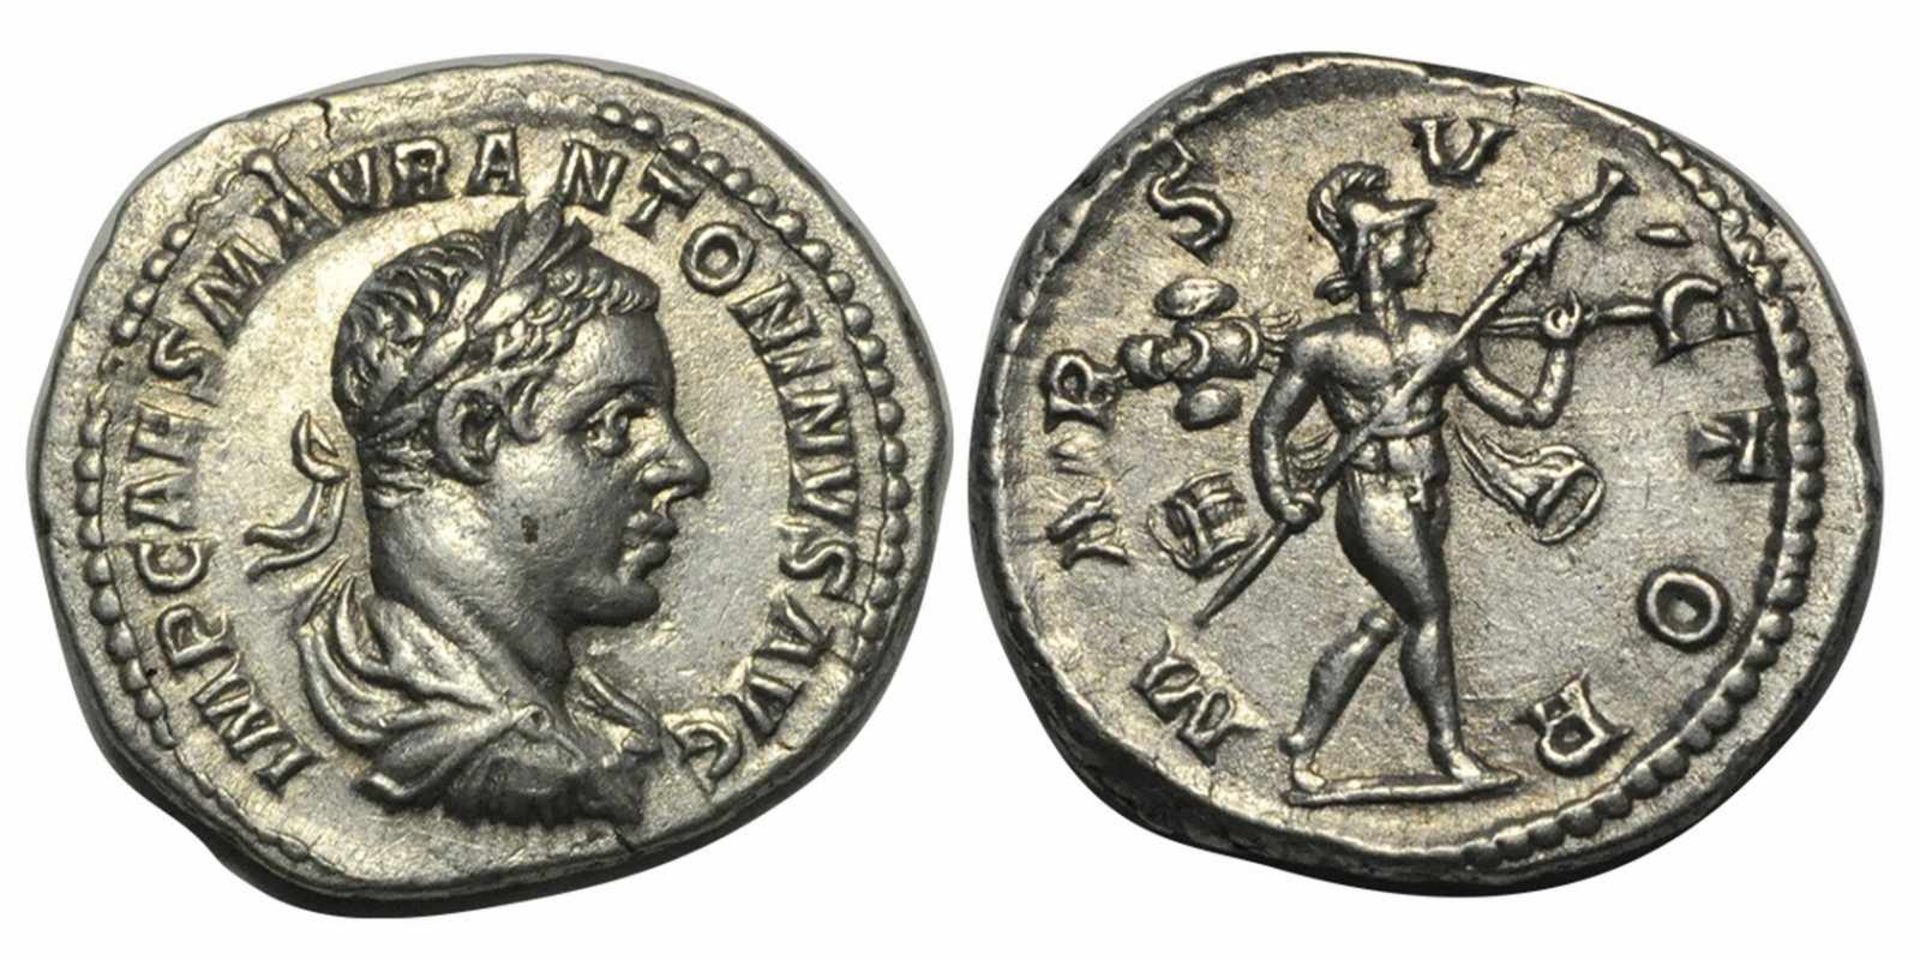 Rome Empire. Elagabalus. 218-222 AD. Silver Denarius. AURome Empire. Elagabalus. 218-222 AD.